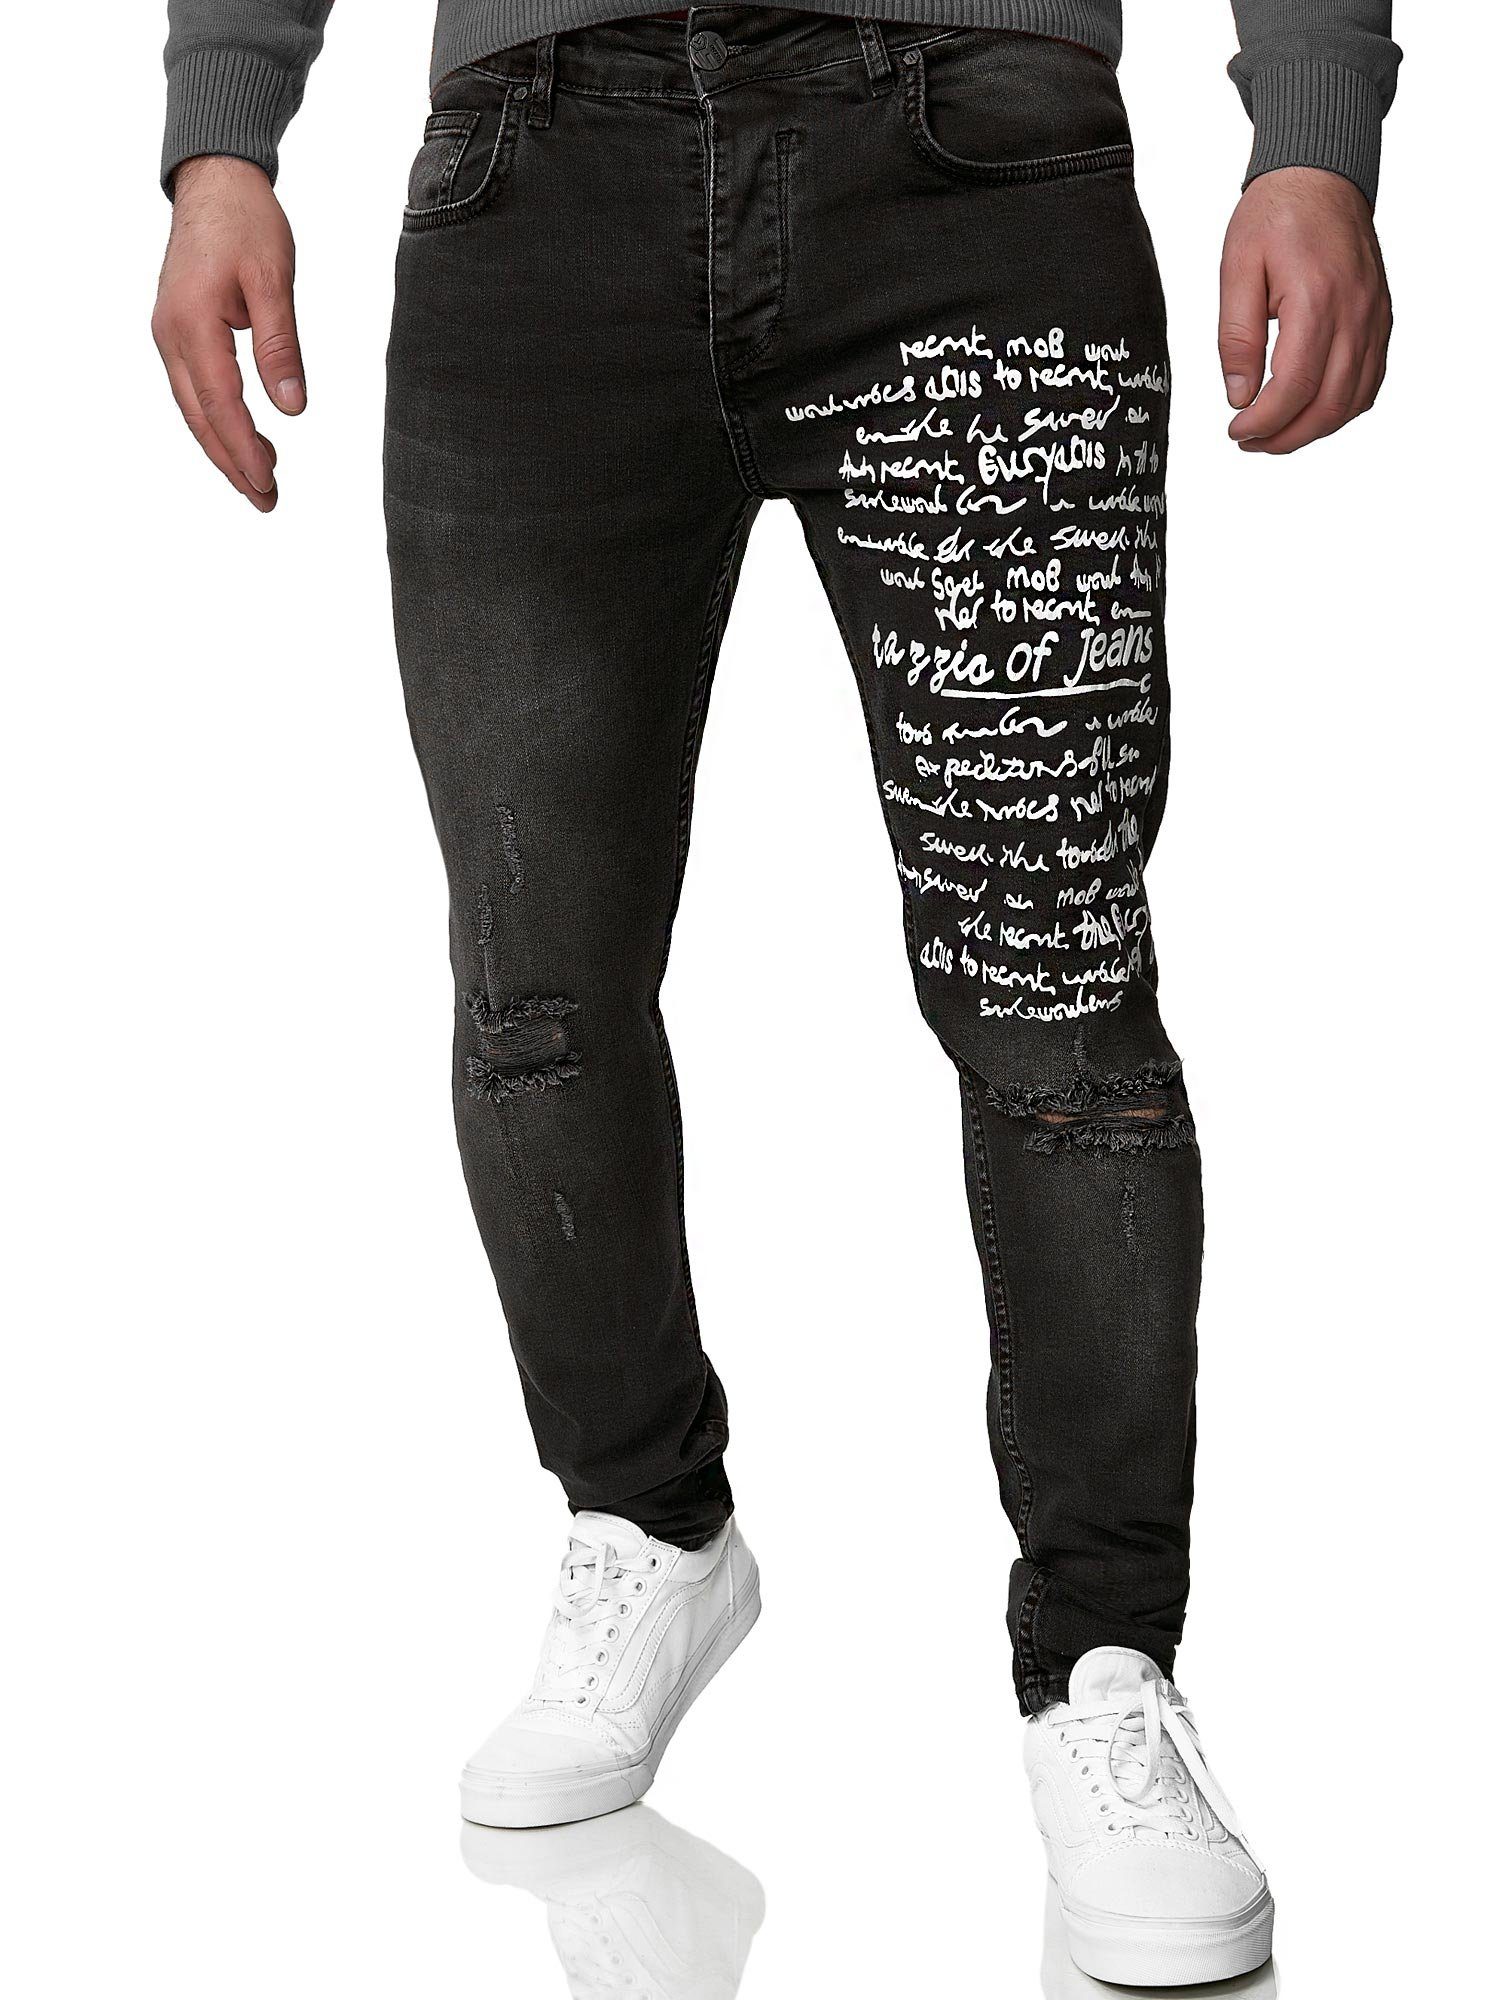 【Billig】 Tazzio Skinny-fit-Jeans Destroyed-Look A102 schwarz im